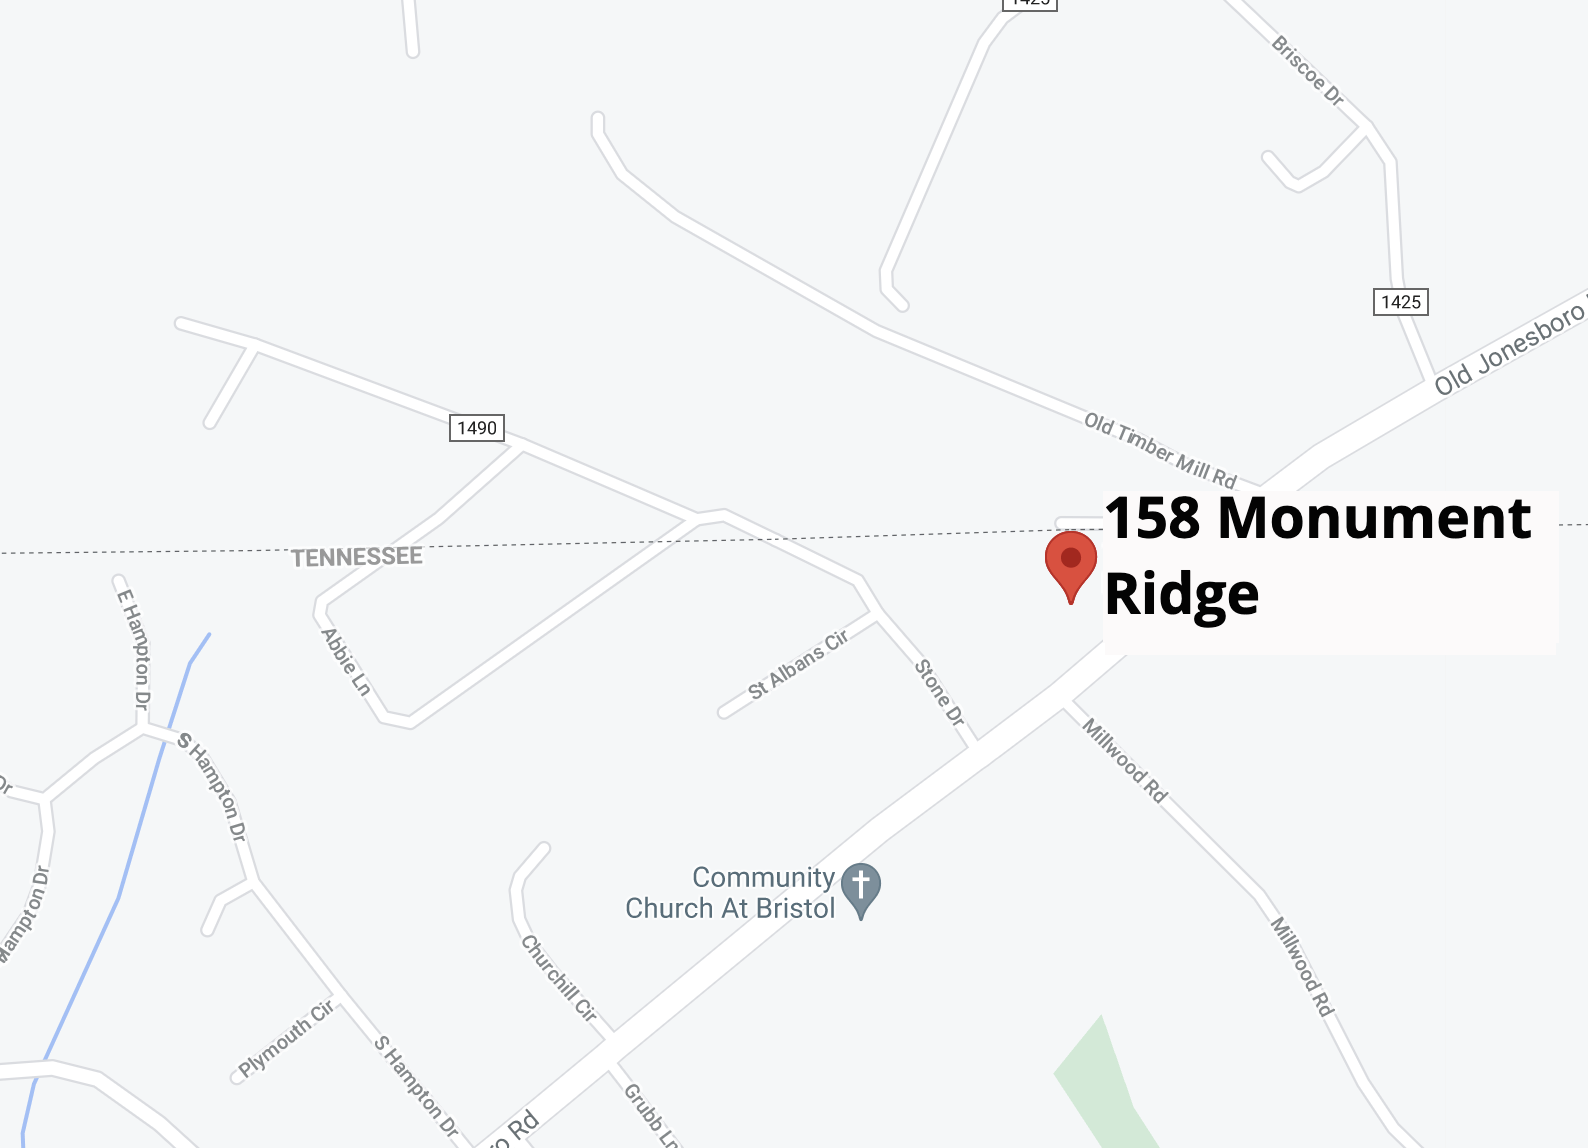 158 Monument Ridge, Bristol, TN 37620 Google Maps Image linking to Google Maps Directions